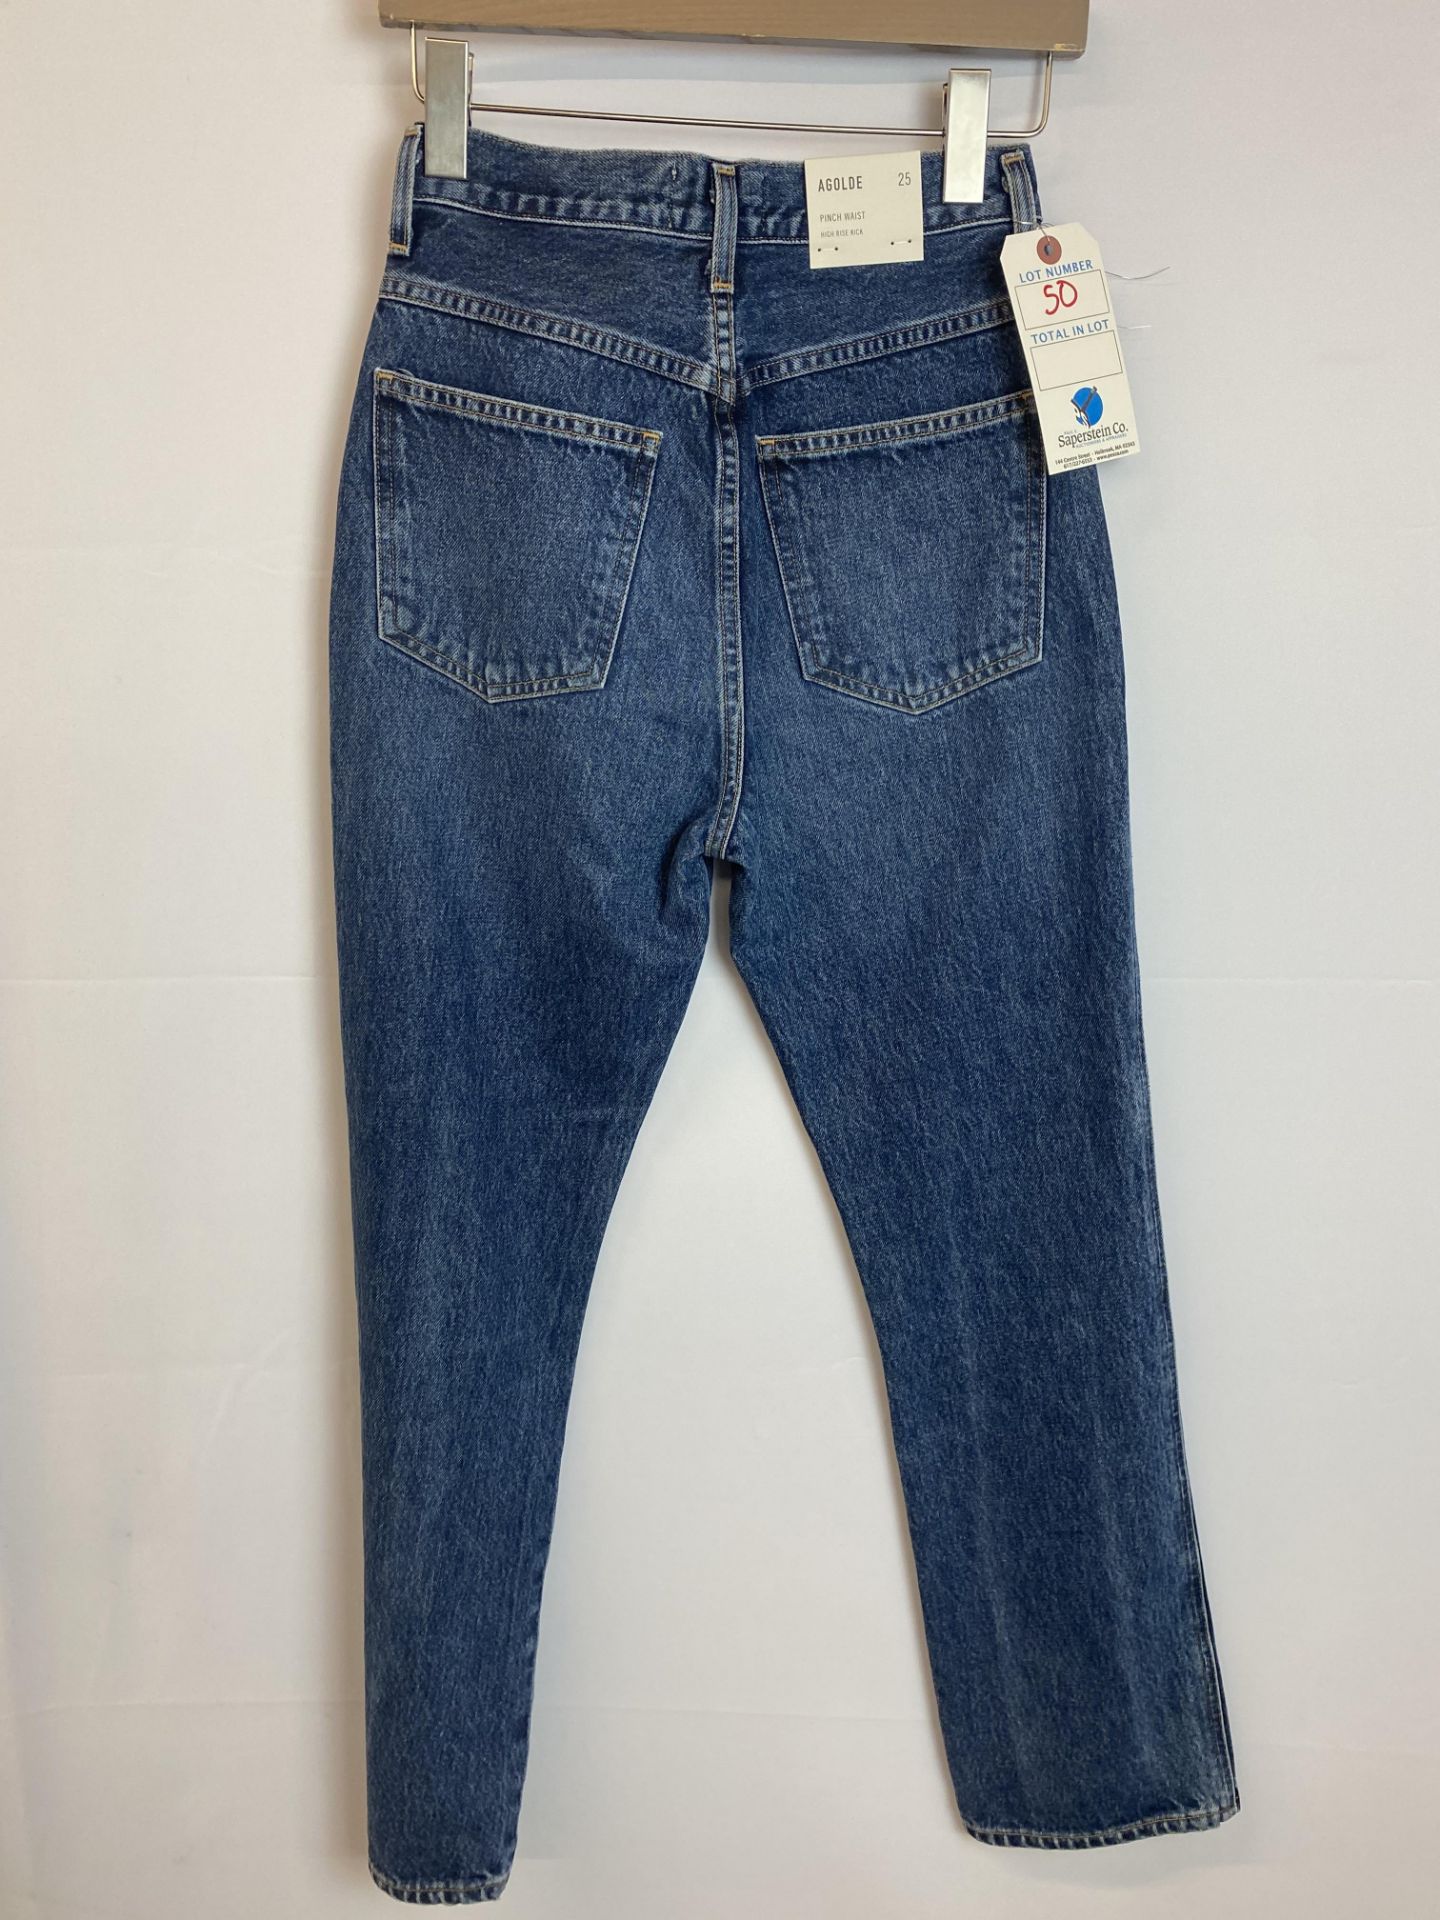 Agolde Pinch Waist High Rise Kick Denim Jean, Size: 25, Original Retail Price: $198